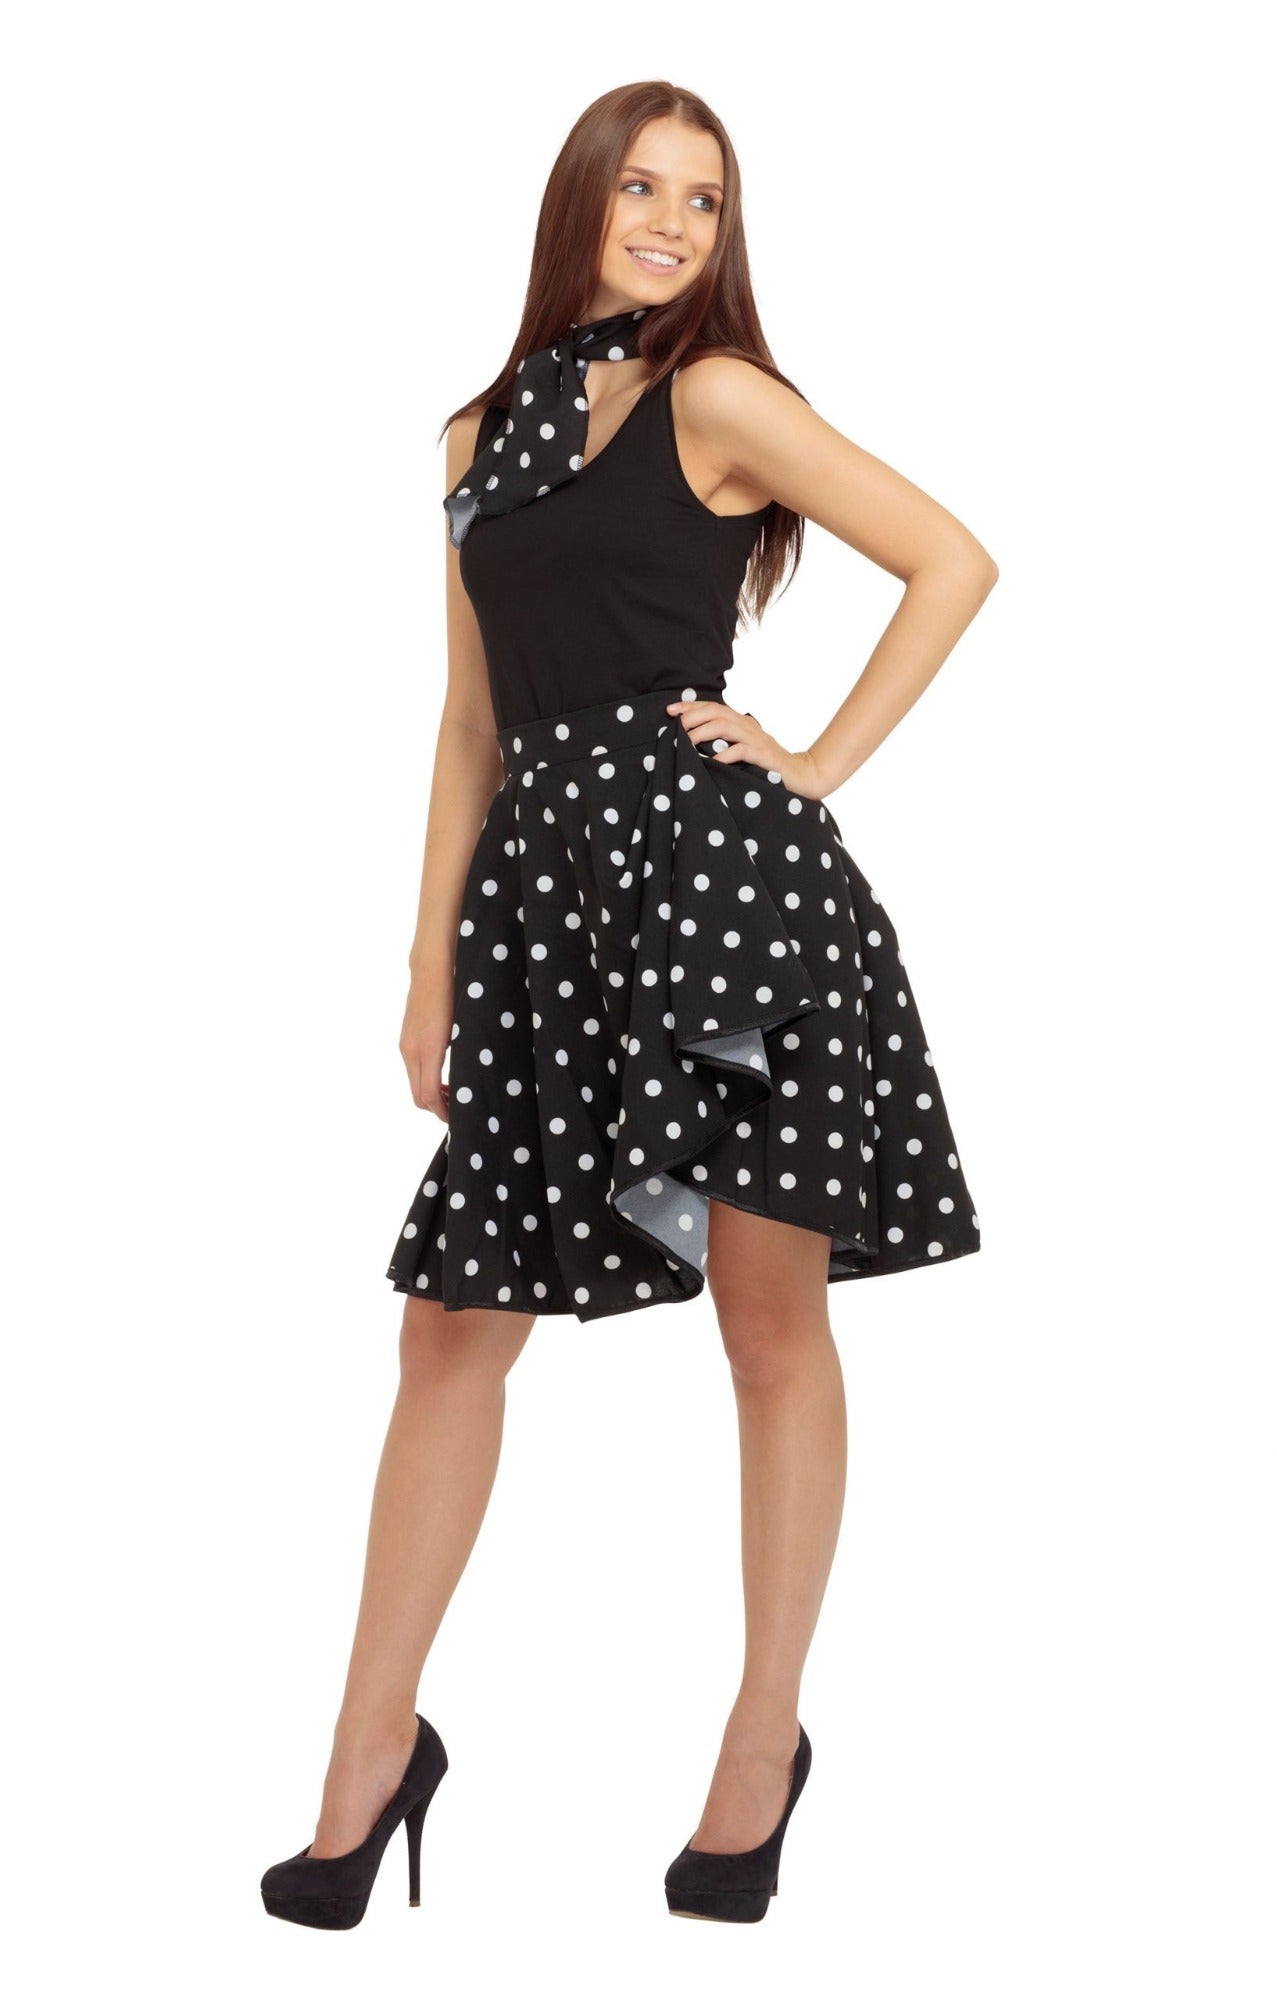 Ladies 1950's Rock n Roll Skirt Black with White Polka Dot